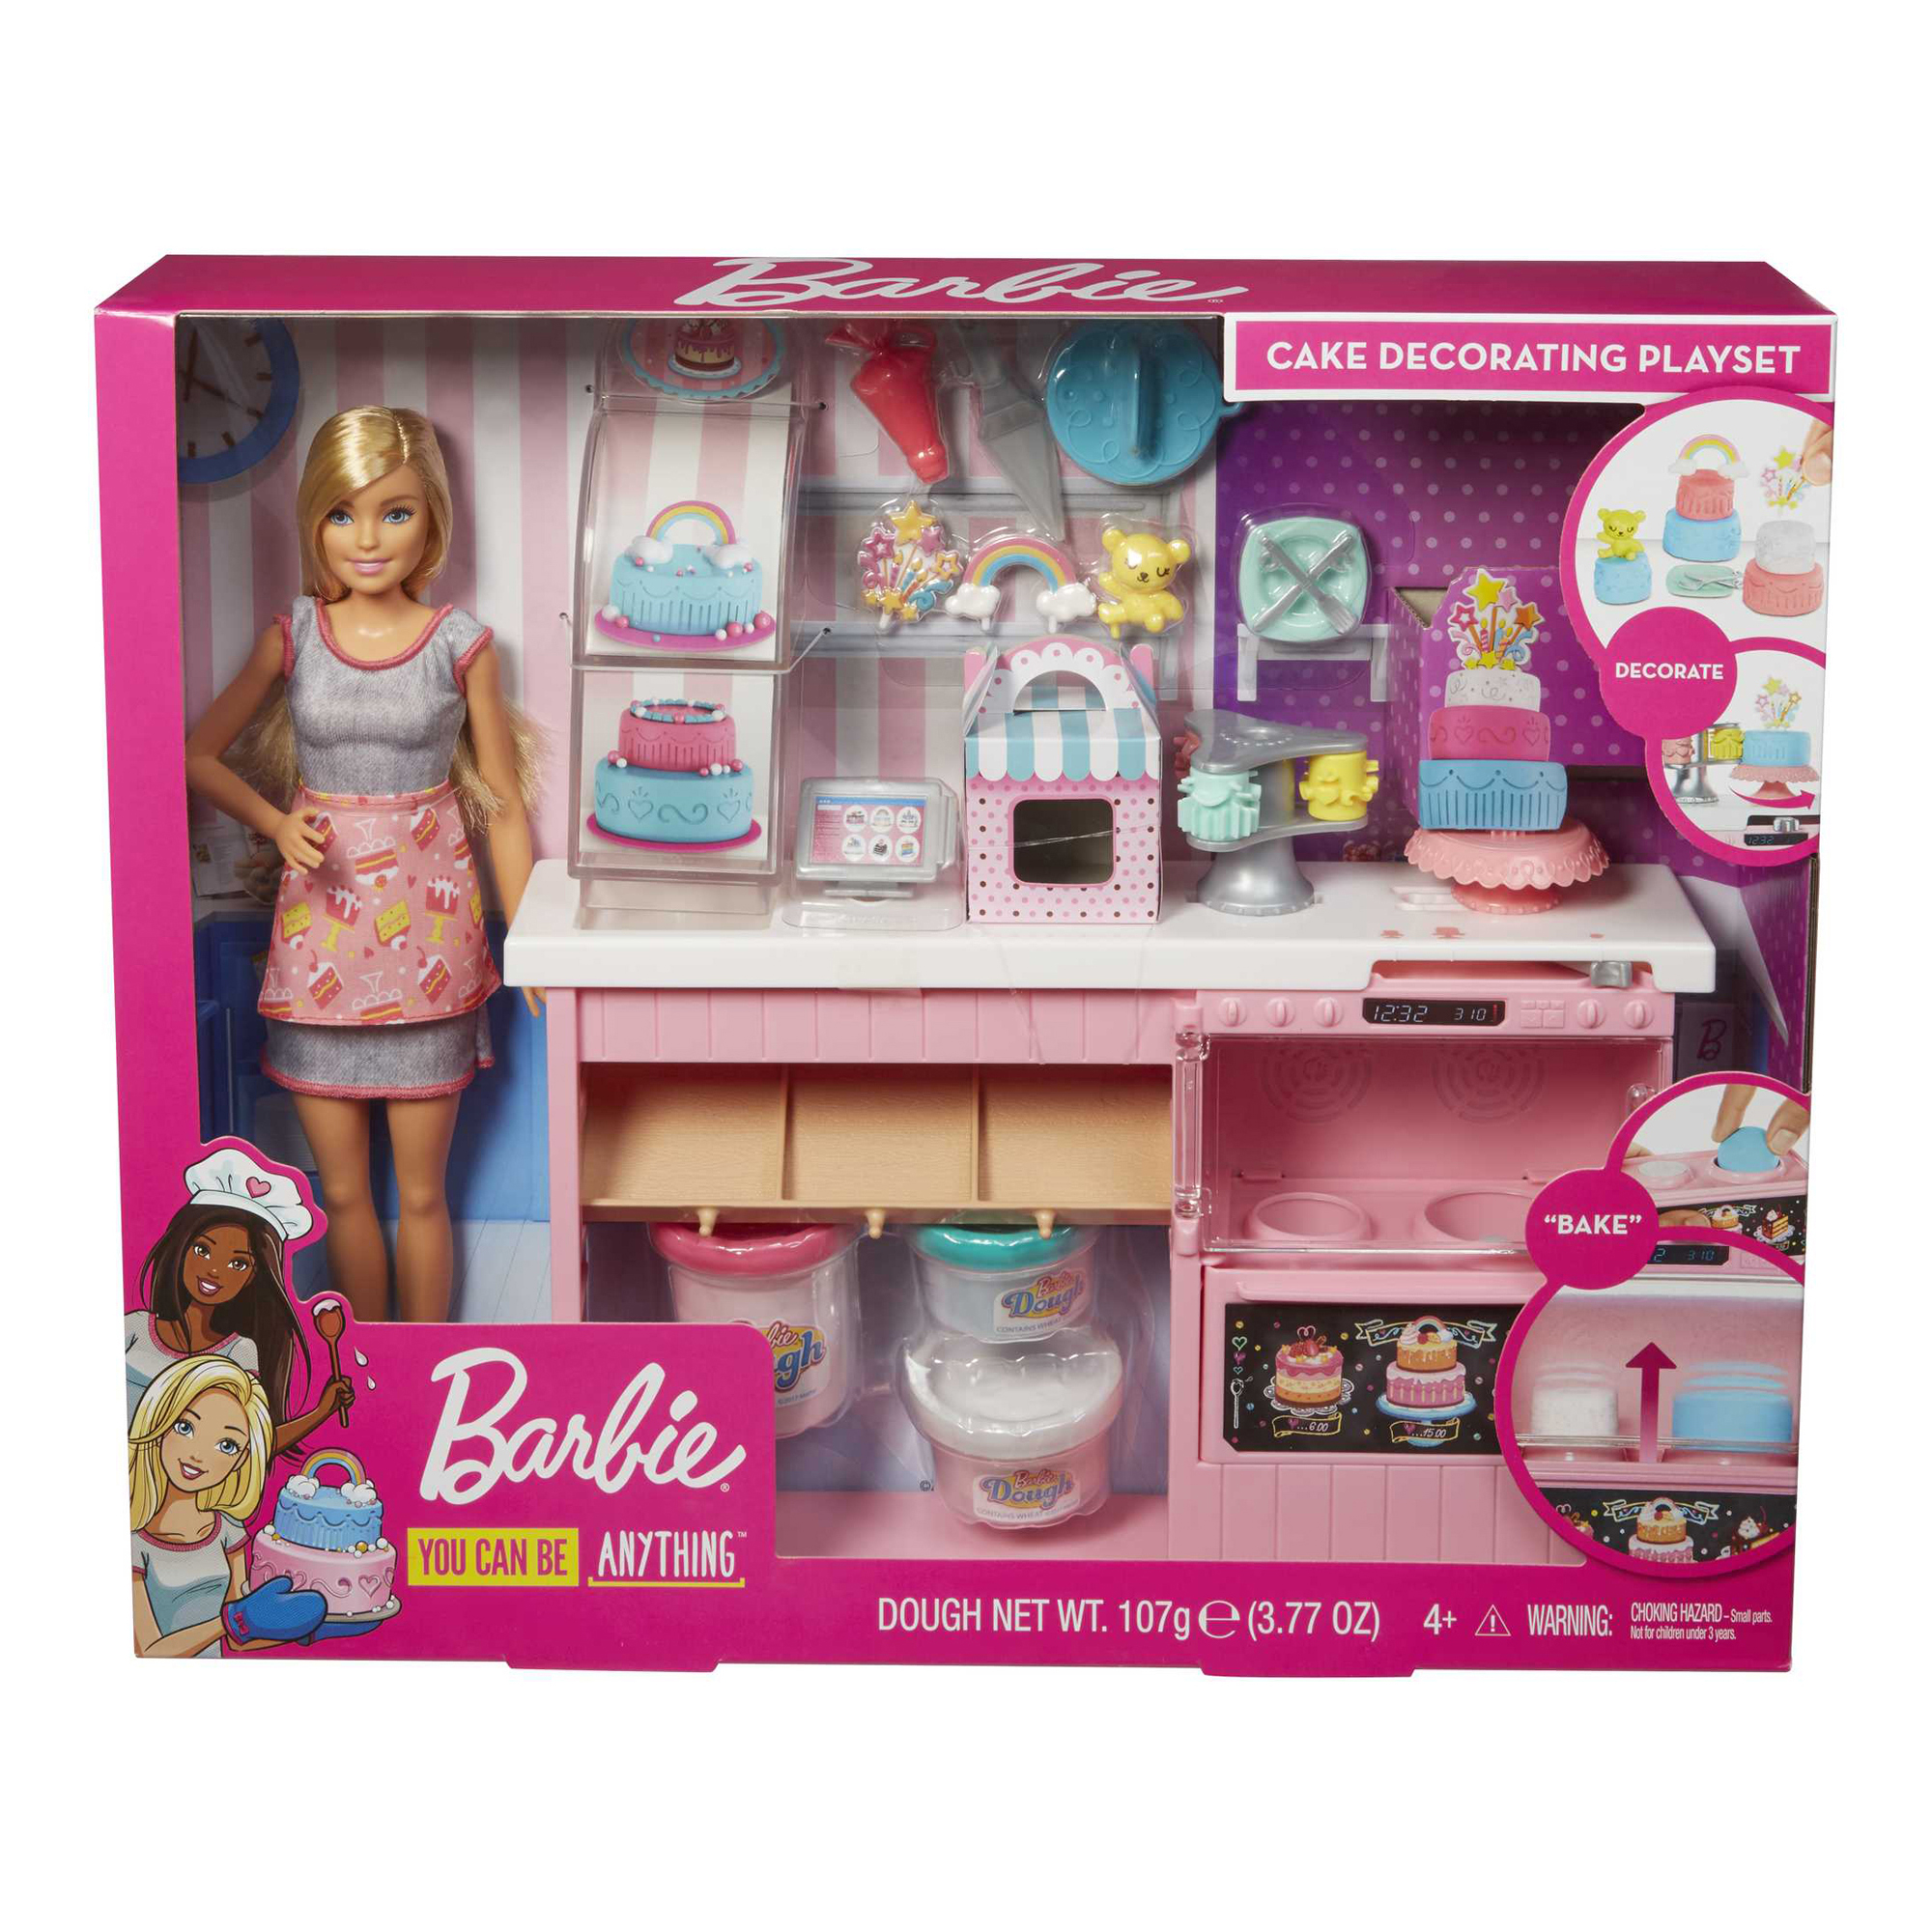 Barbie Playset Pasticceria con Bambola e Accessori da Cucina - Barbie